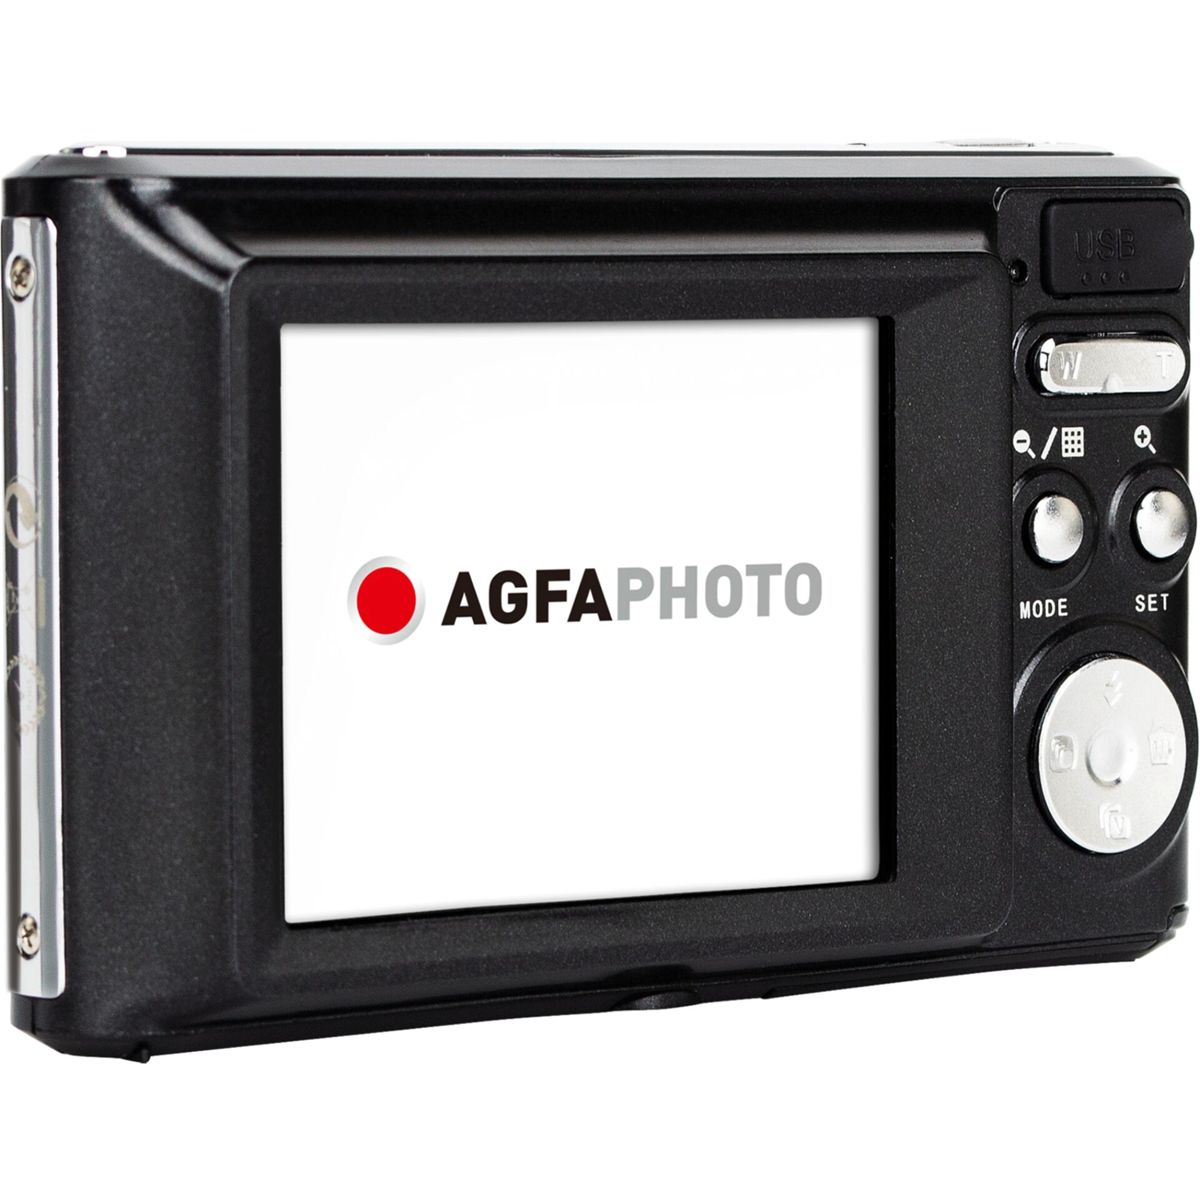 AGFAPHOTO Compact opt. x Zoom, Display- Cam TFT Digitalkamera schwarz, LCL 8 DC5200